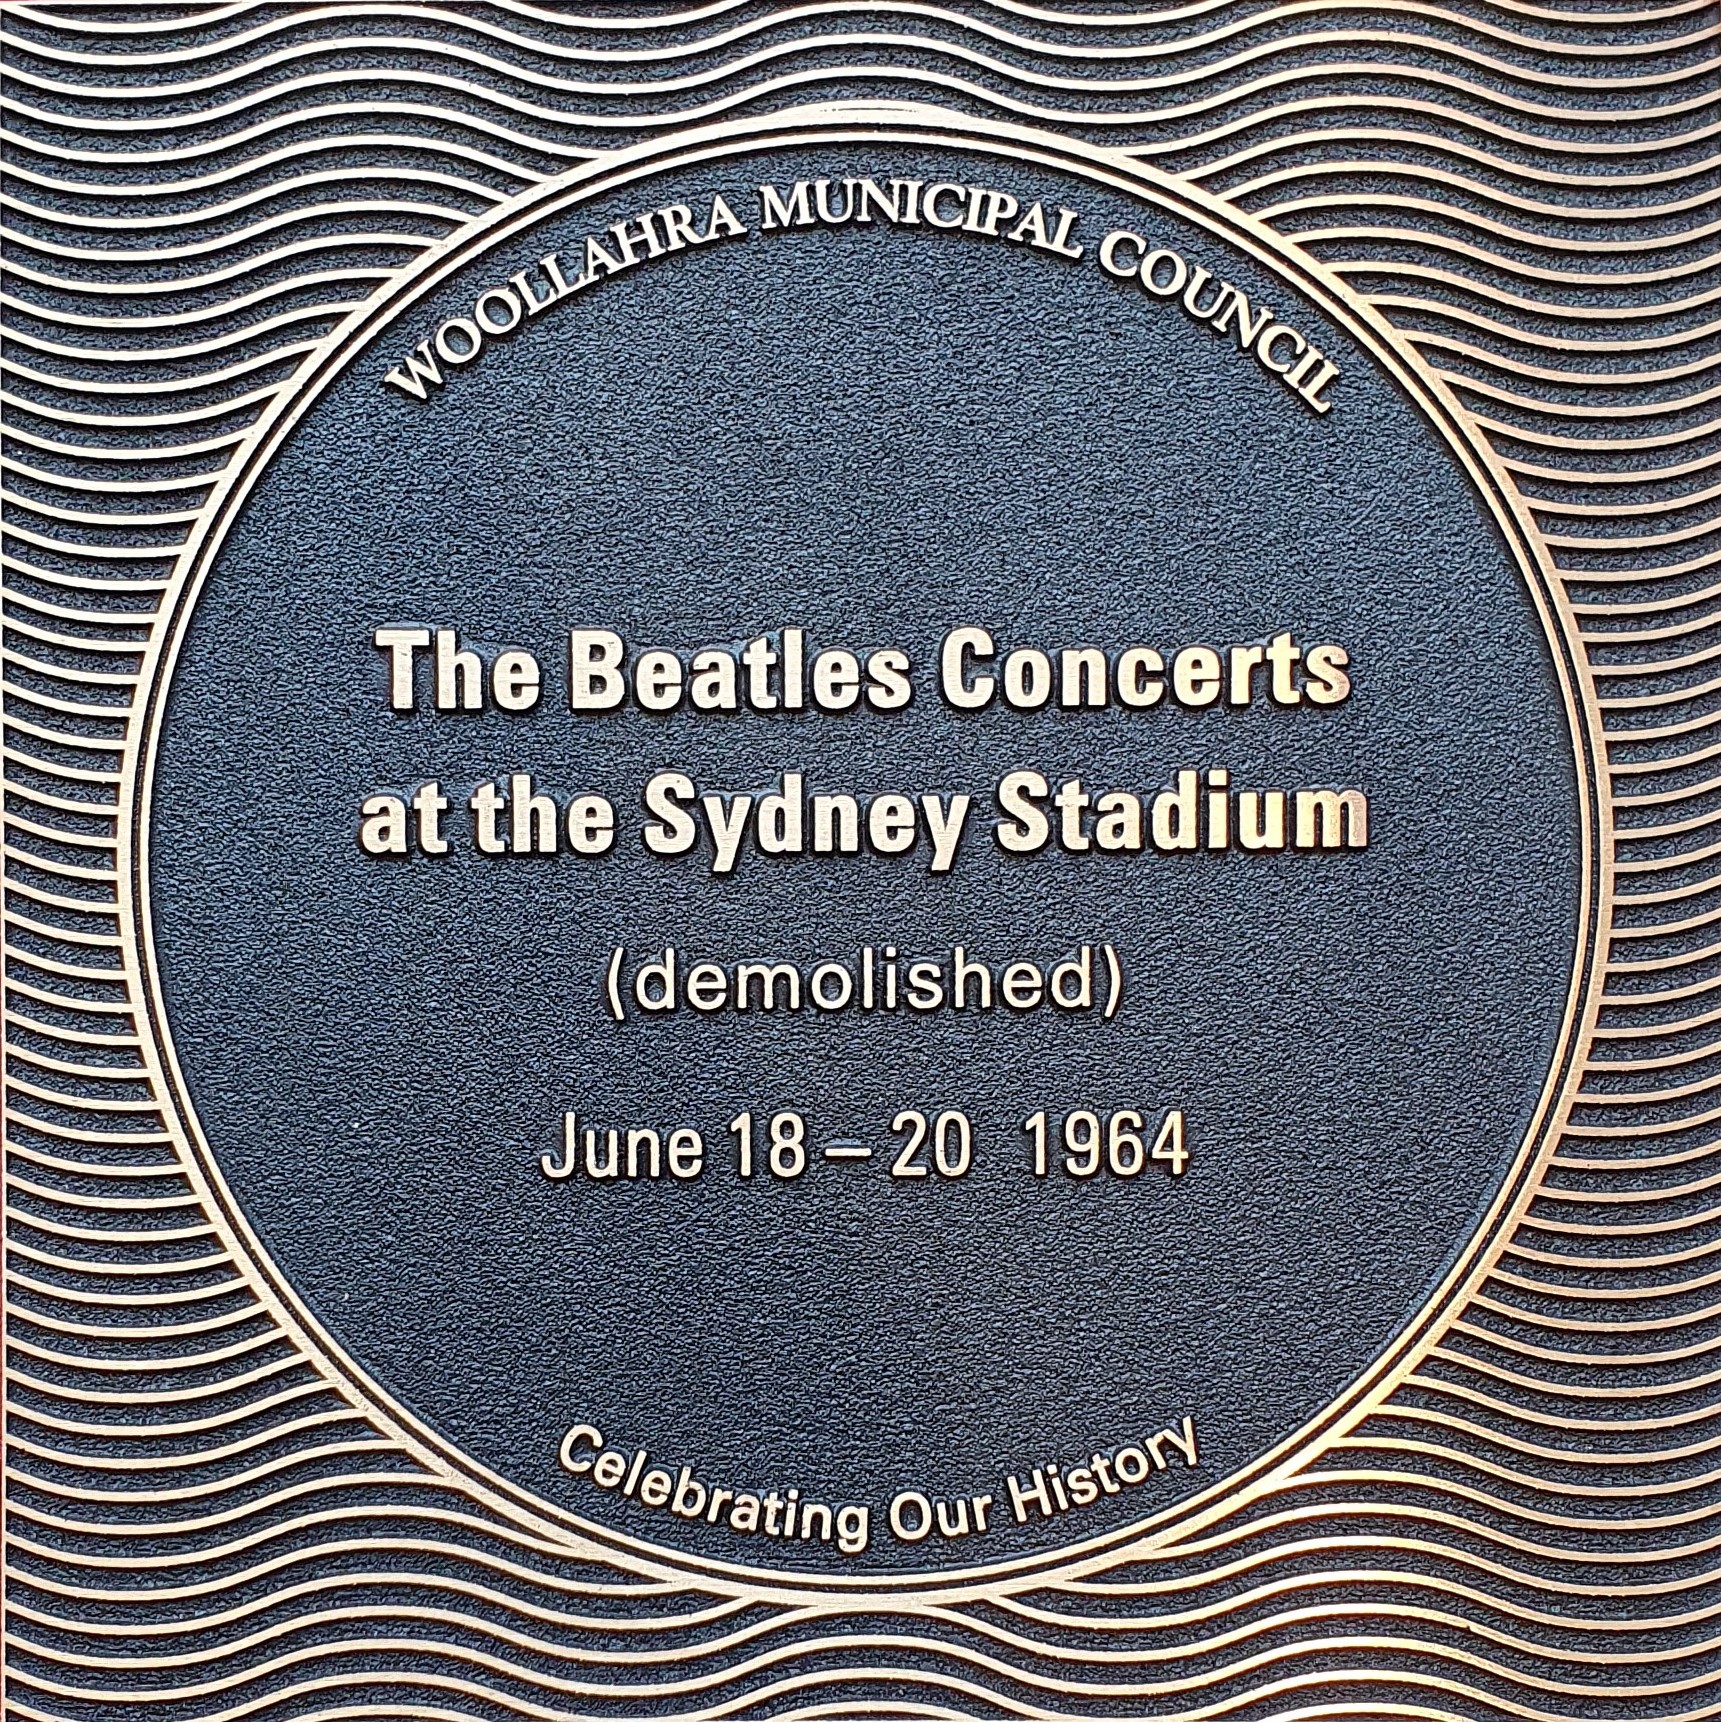 The Beatles Concerts at the Sydney Stadium, June 1964 plaque